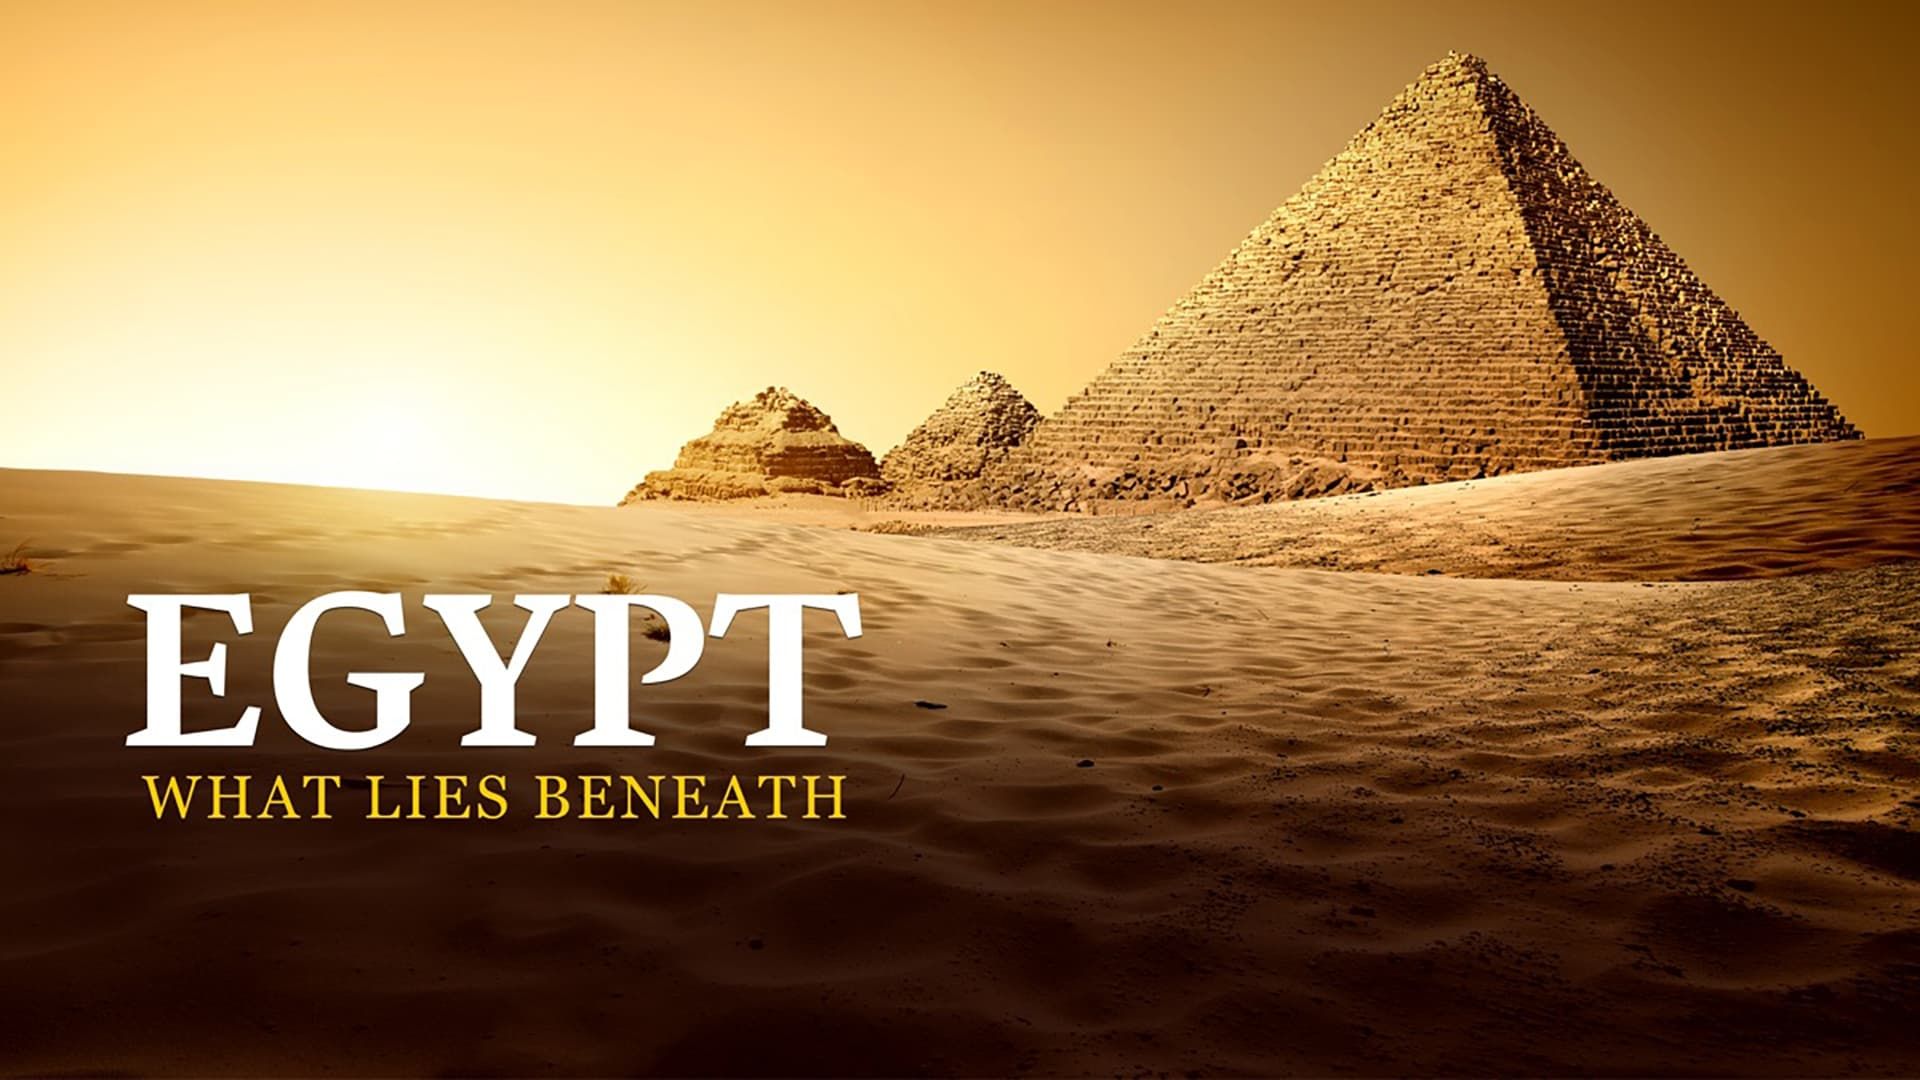 Egypt: What Lies Beneath background